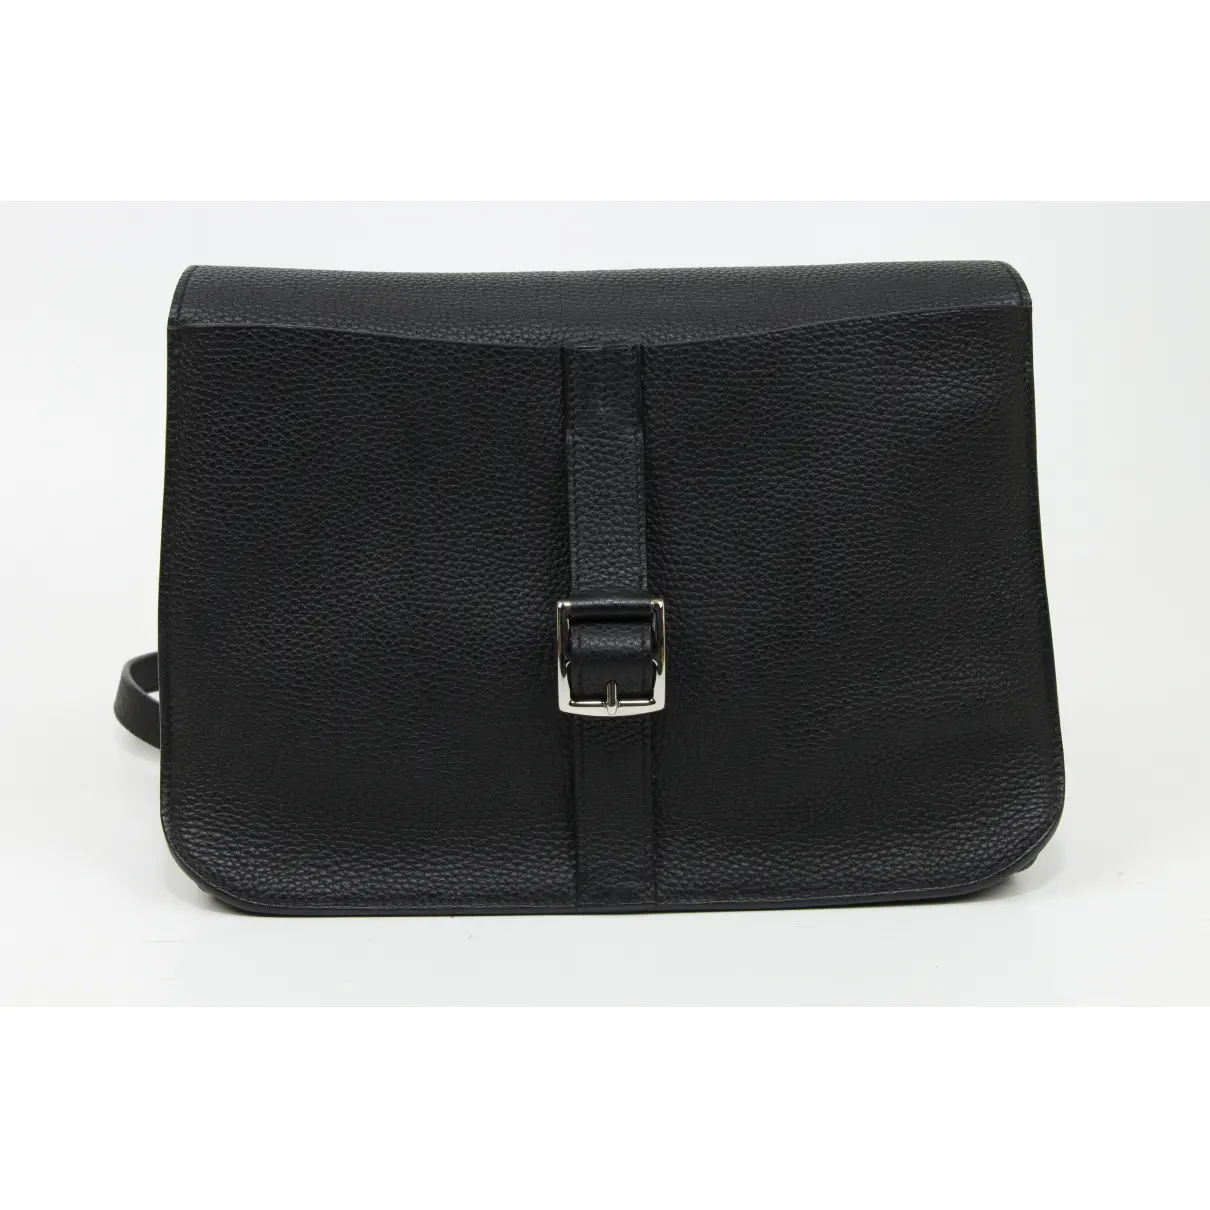 Buy Hermès Halzan leather handbag online